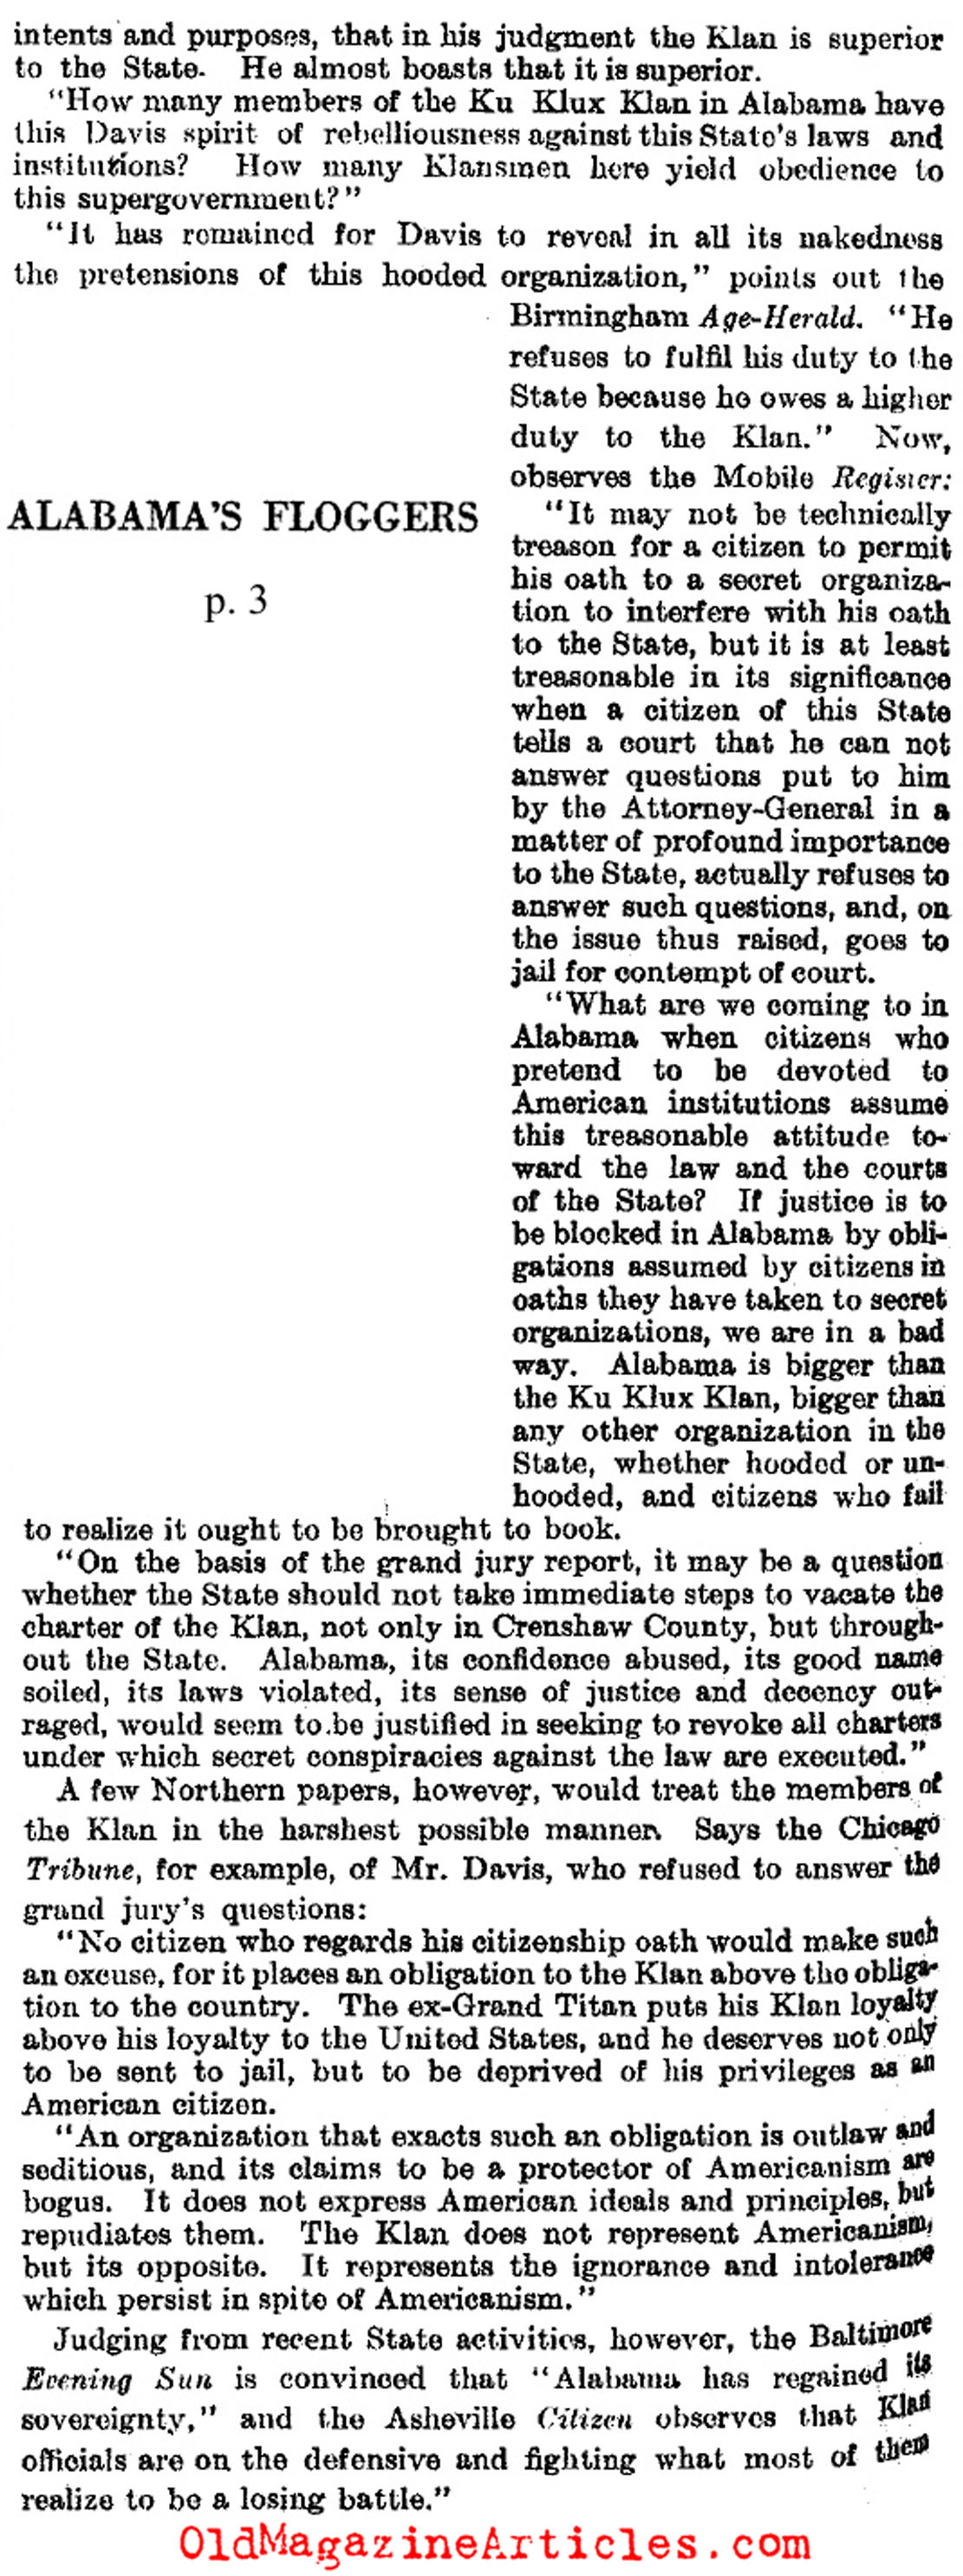 Alabama Klan Convictions  (Literary Digest, 1927)